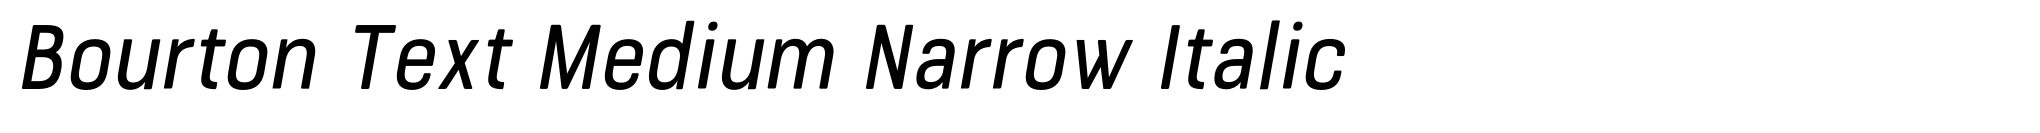 Bourton Text Medium Narrow Italic image